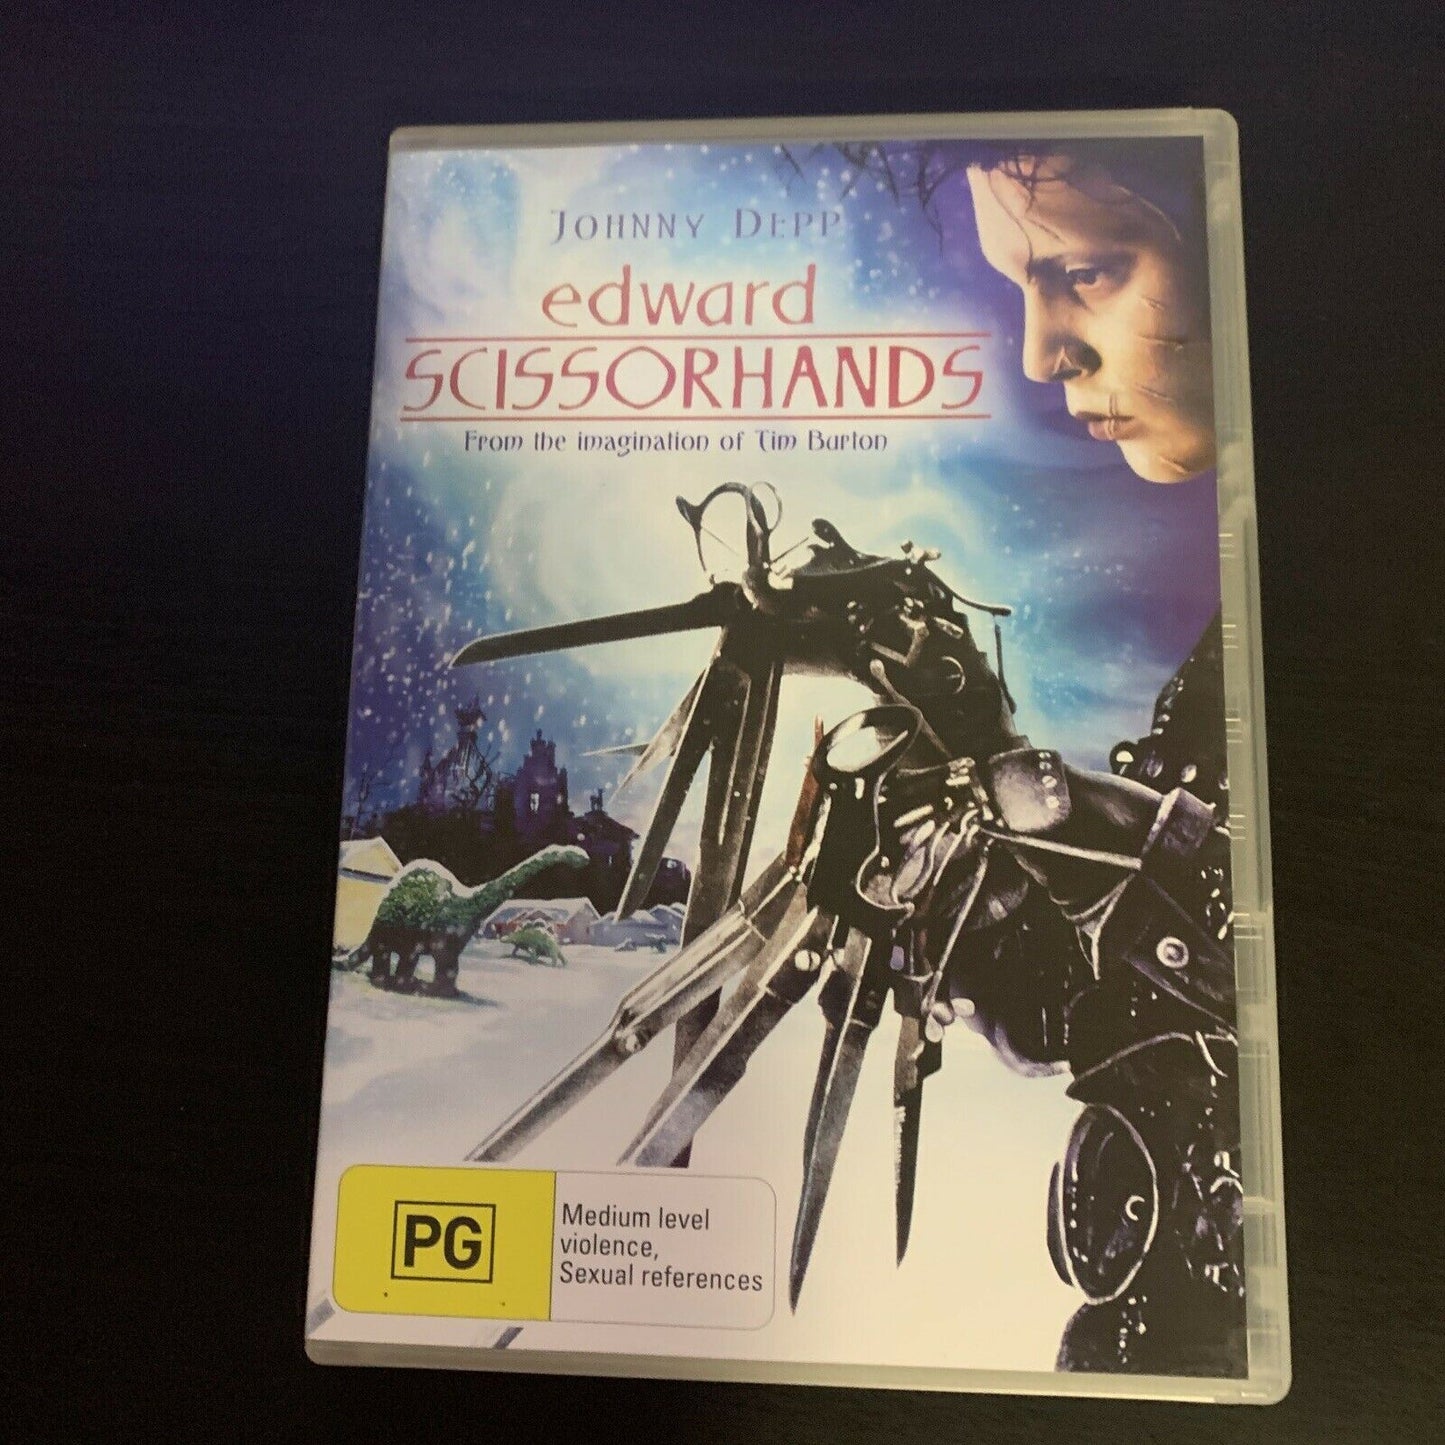 Edward Scissorhands (DVD, 1990) Johnny Depp, Winona Ryder. Region 4